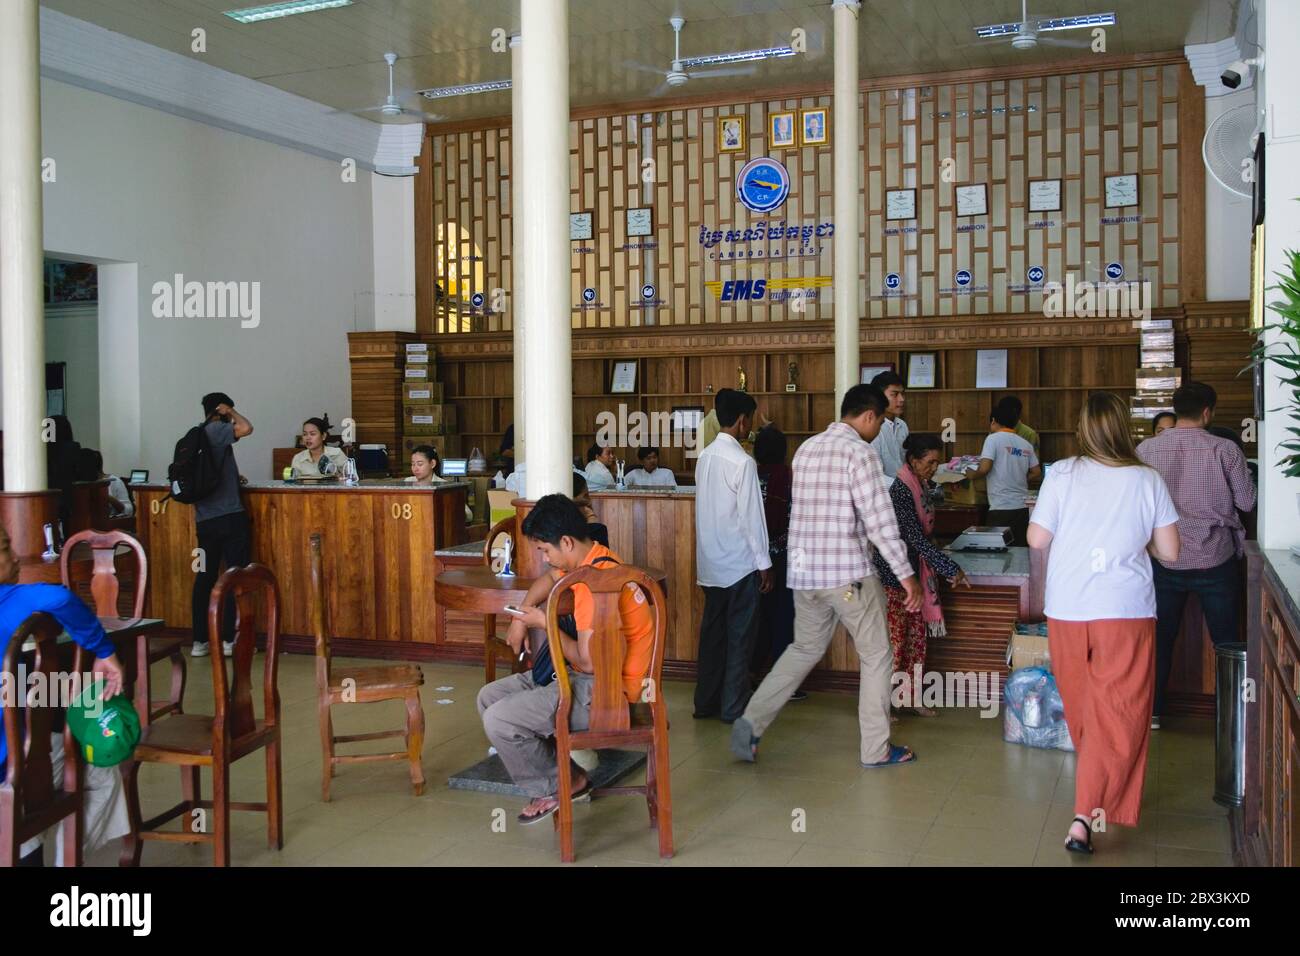 A post office in Phnom Penh, Cambodia Stock Photo